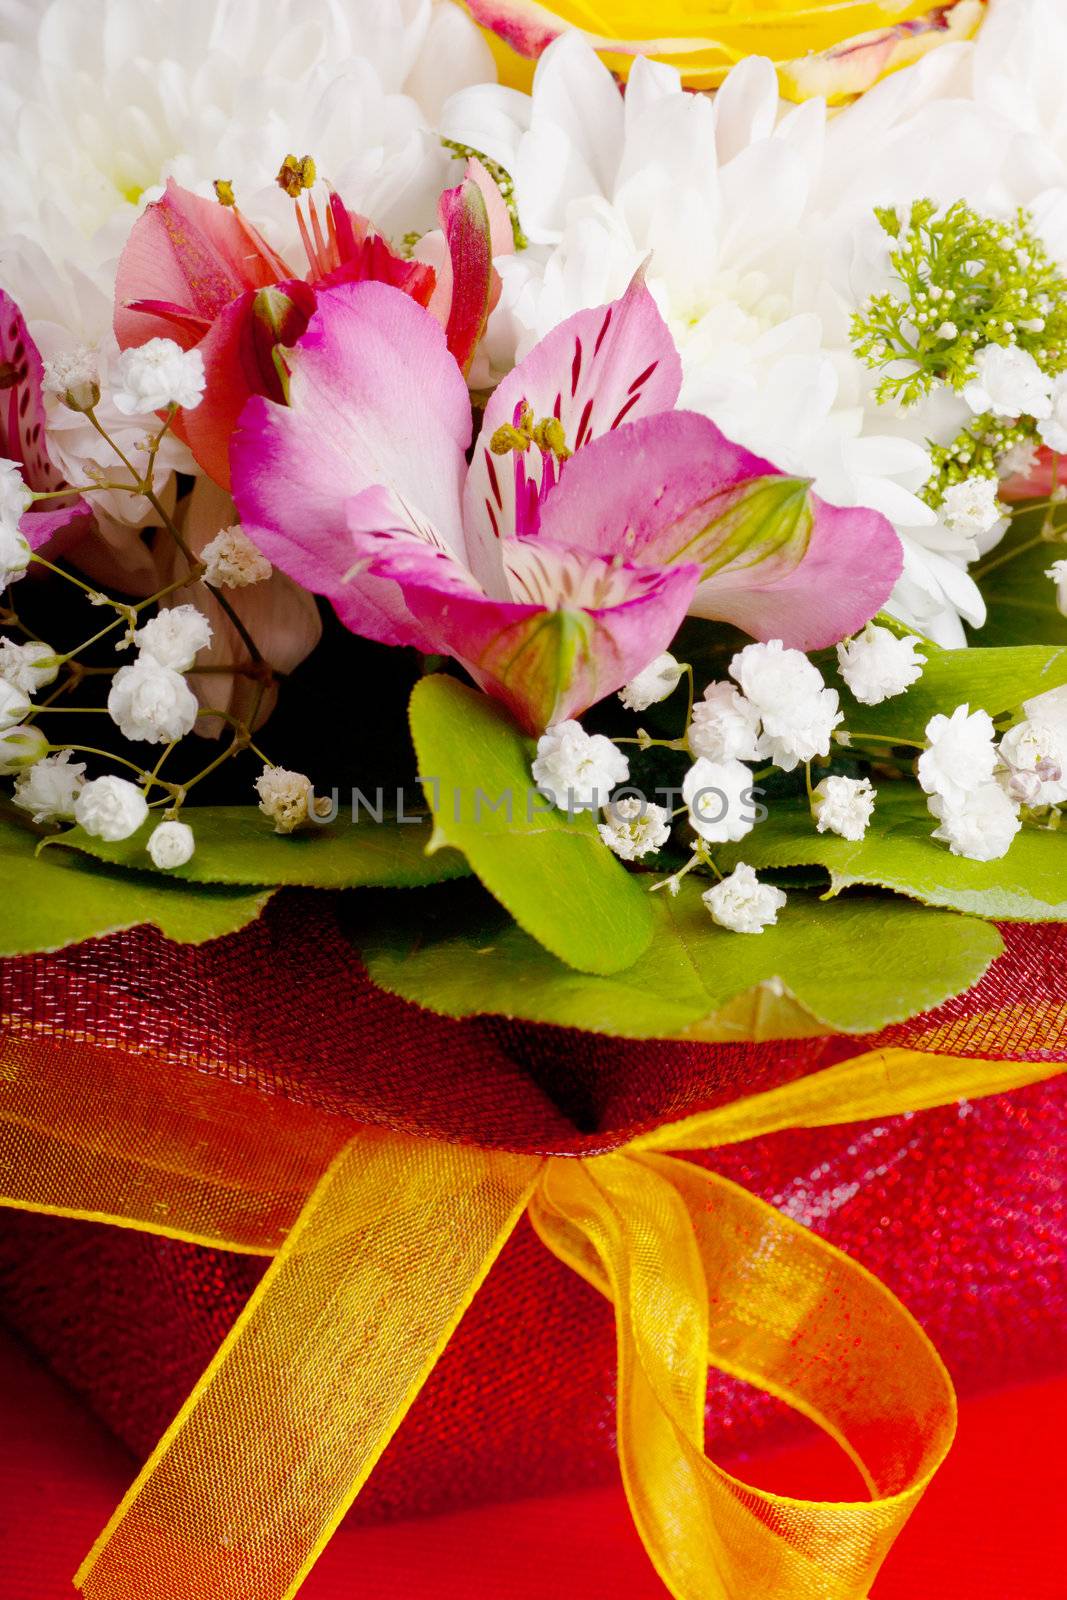 Closeup view of wedding bouquet